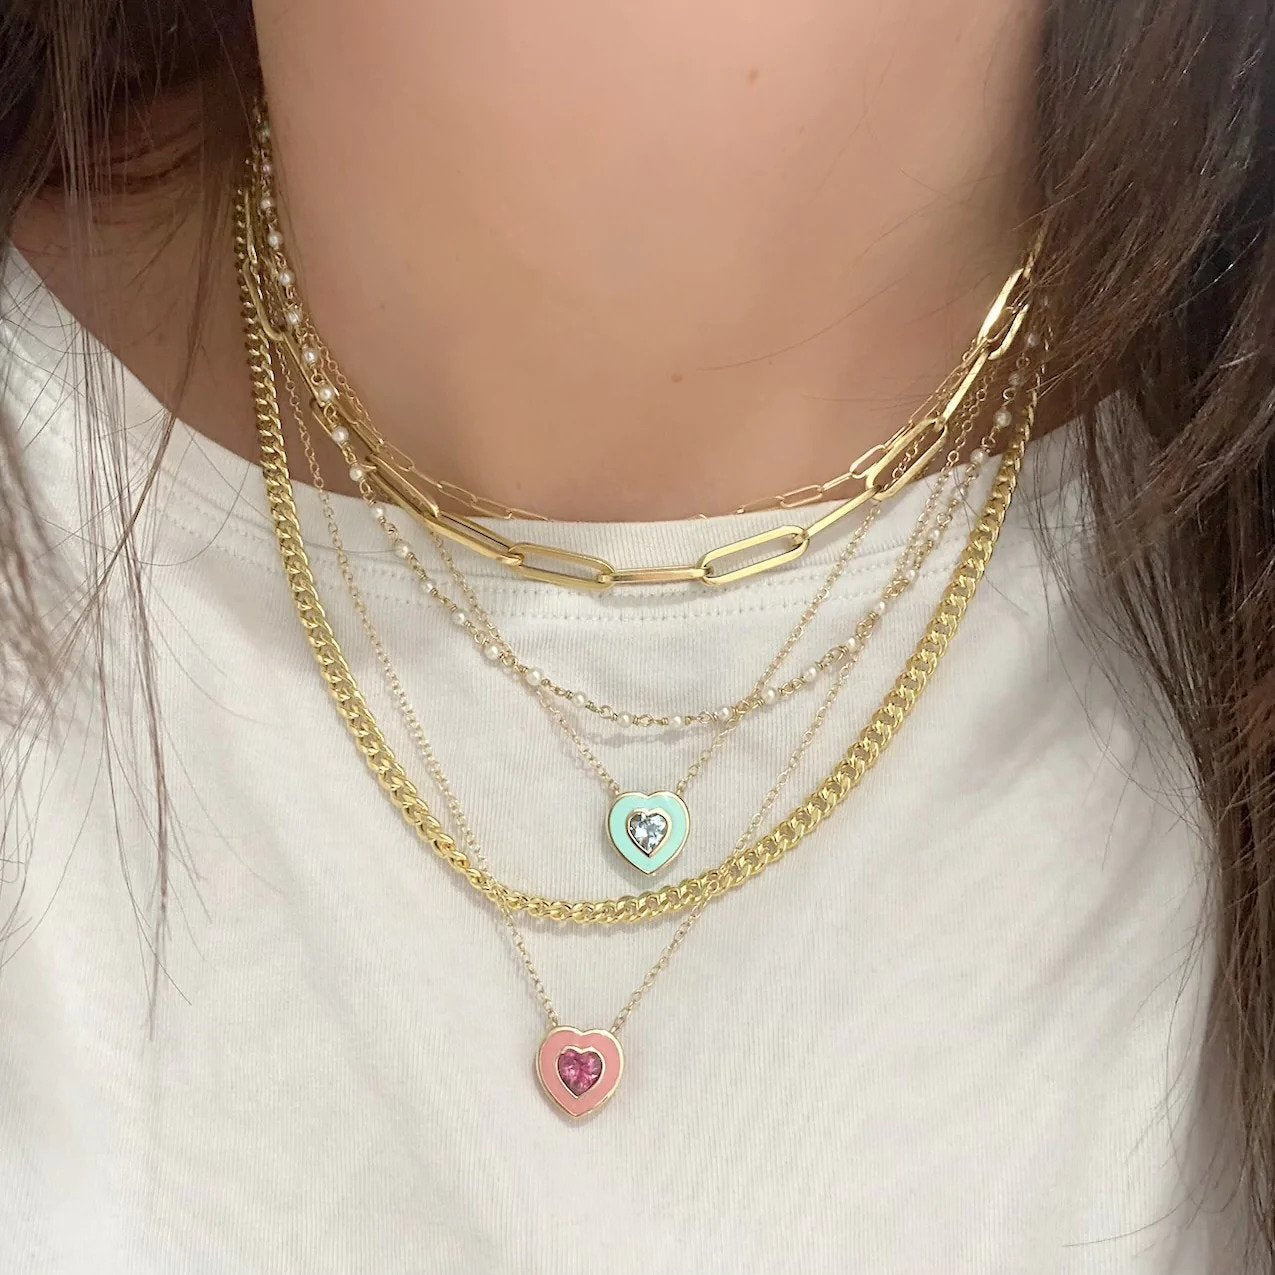 Light Green Enamel and Aqua Heart Necklace